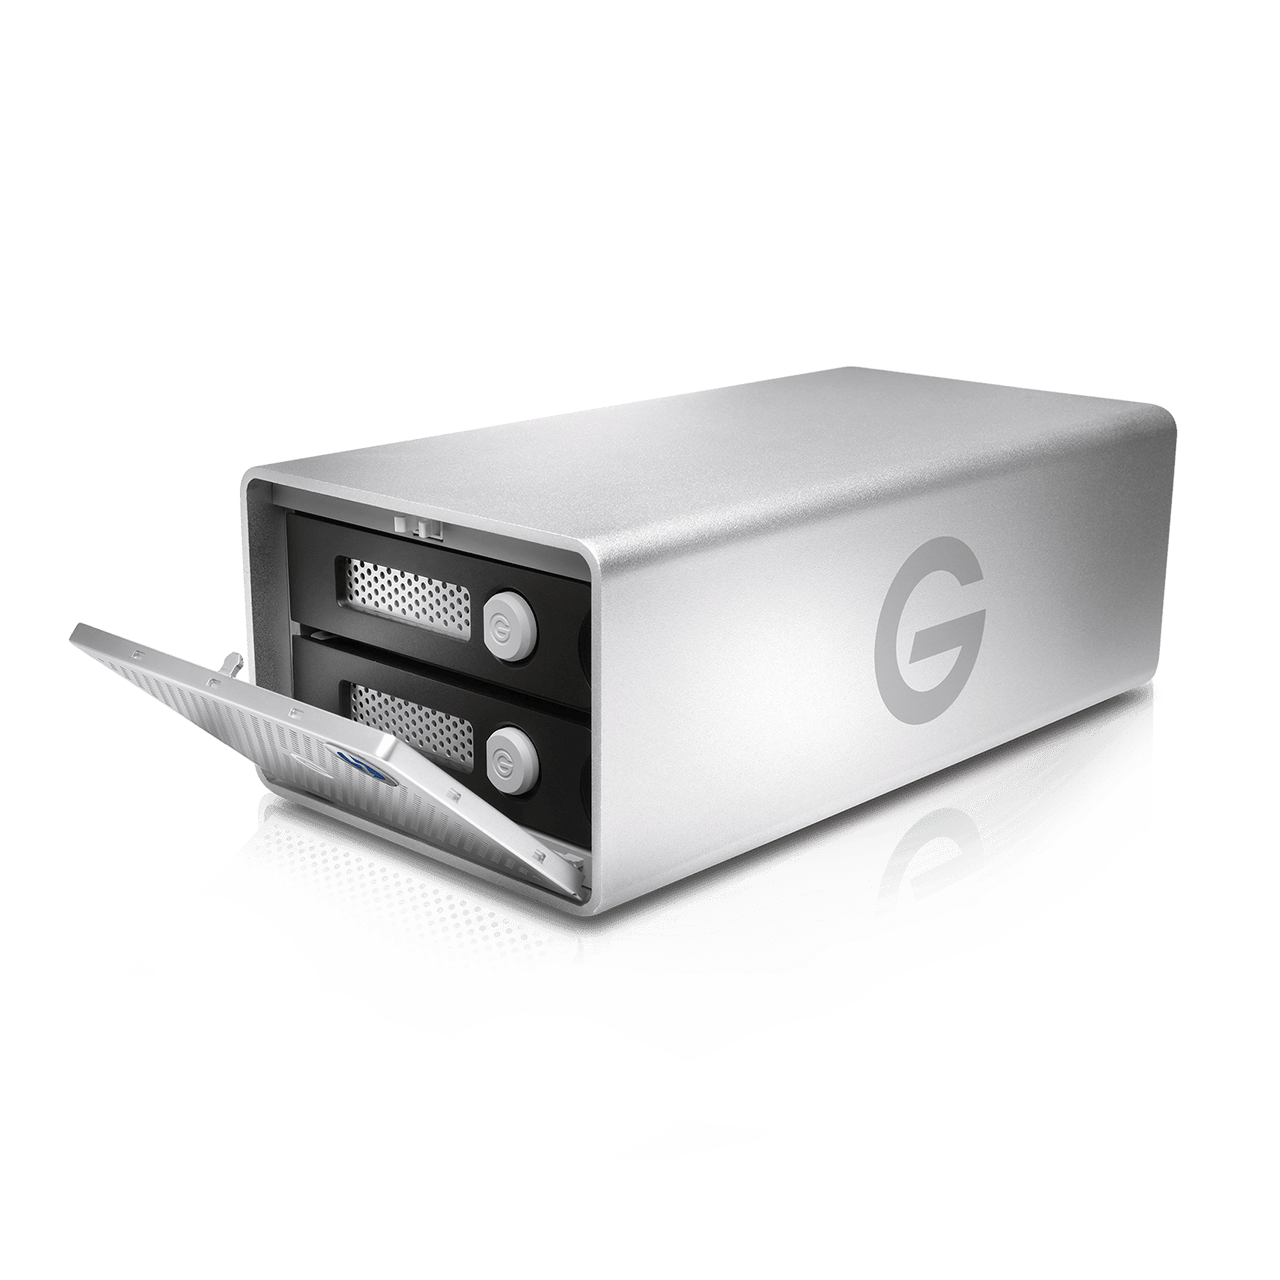 G-Technology G-RAID Removable Thunderbolt 3 USB-C 36TB